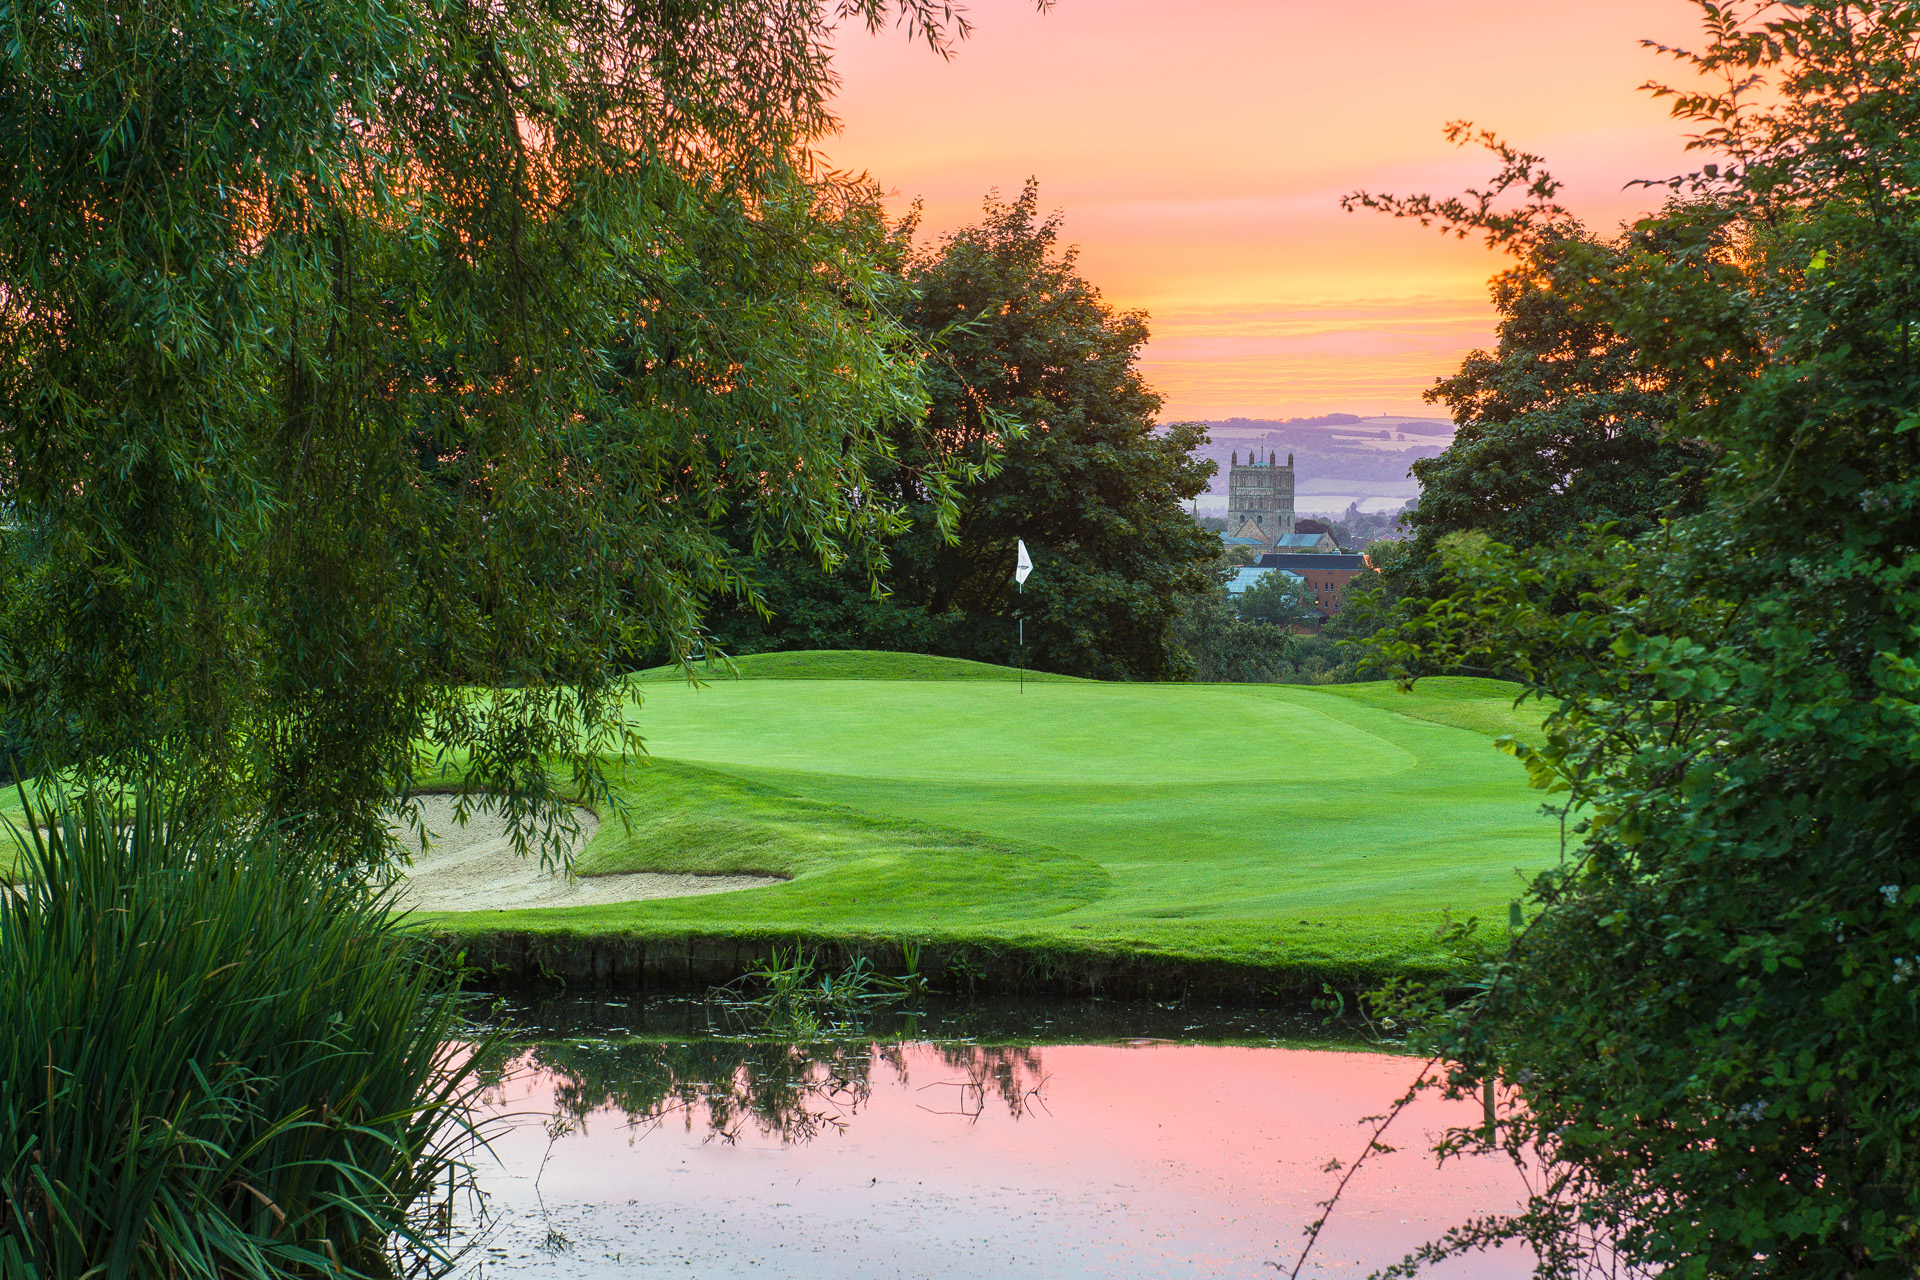 Tewkesbury Park golf course at dusk